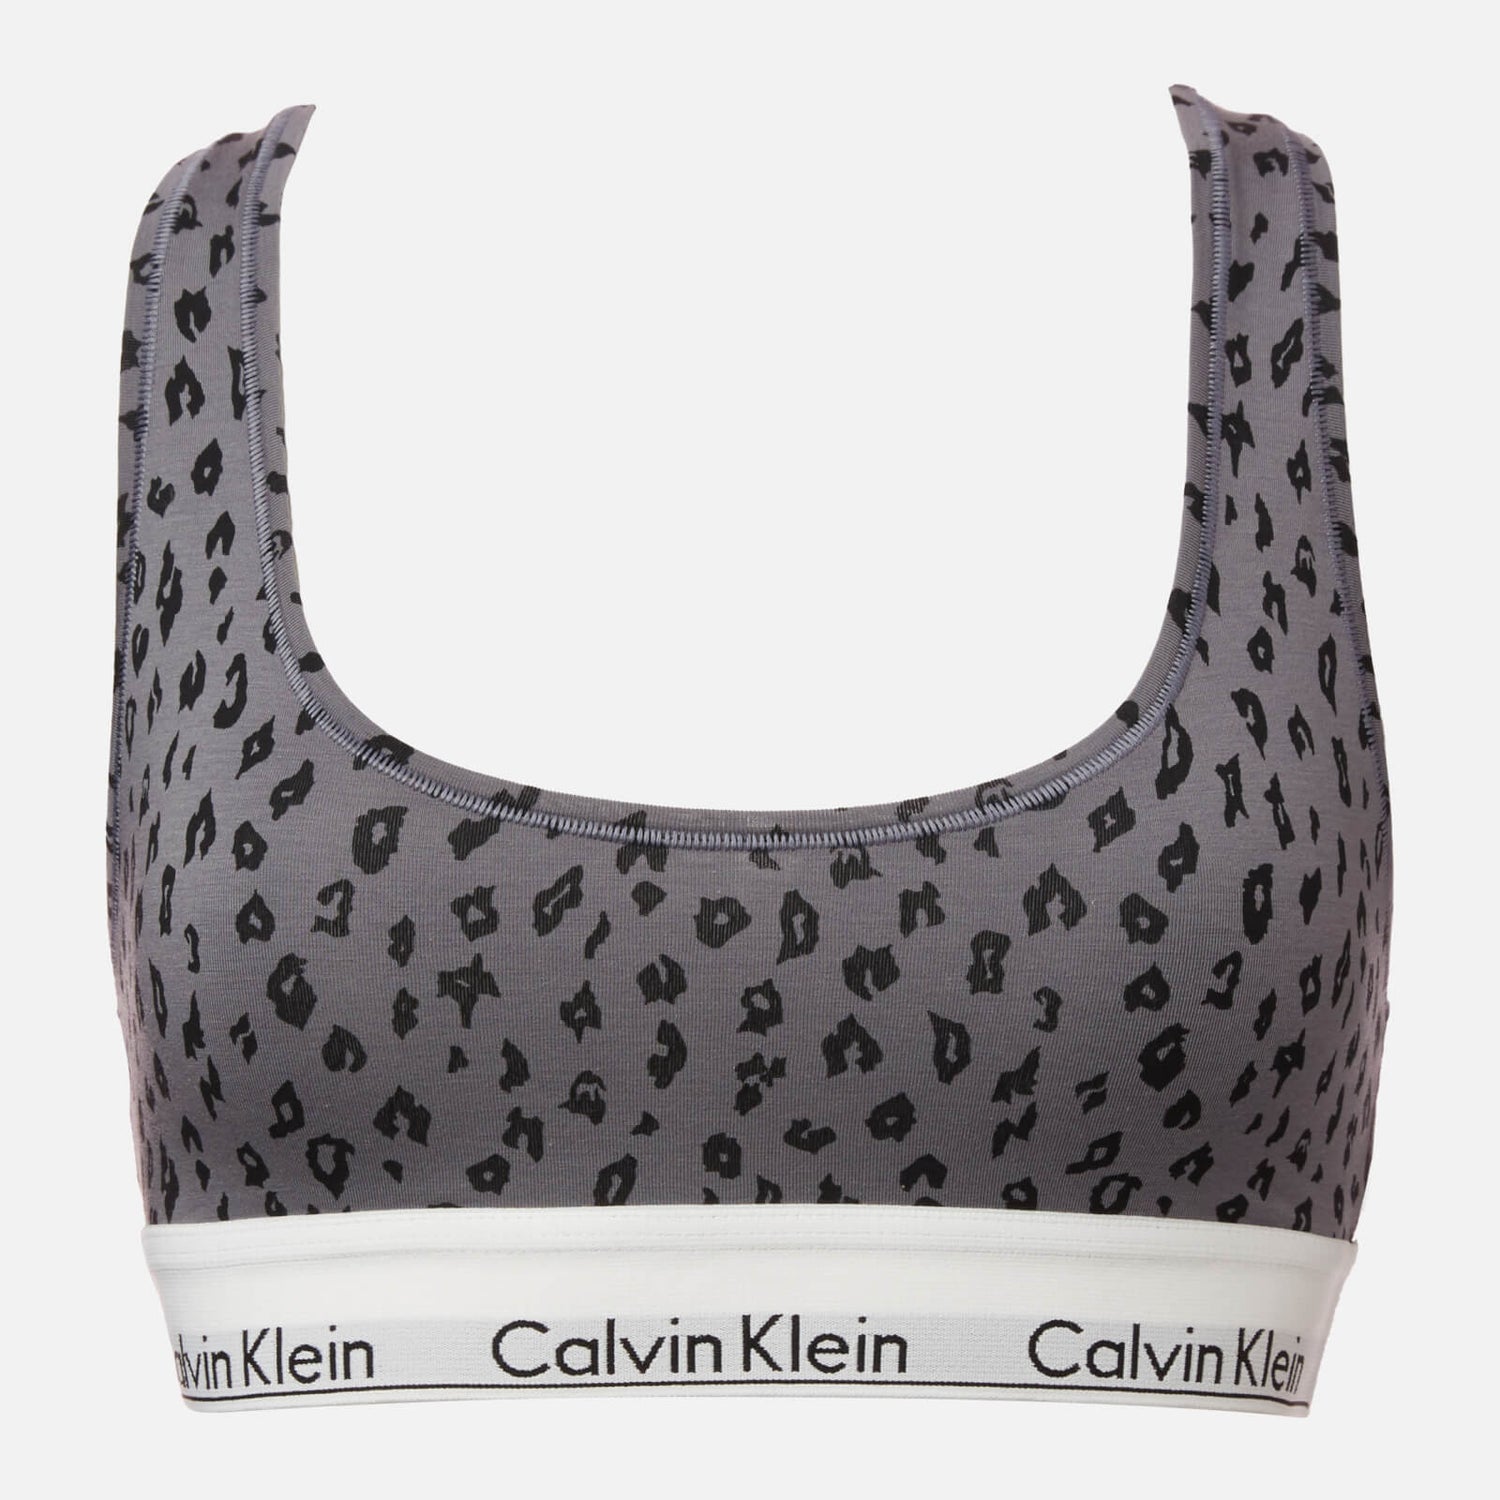 Calvin Klein Women's Cheetah Print Unlined Bralette - Pewter